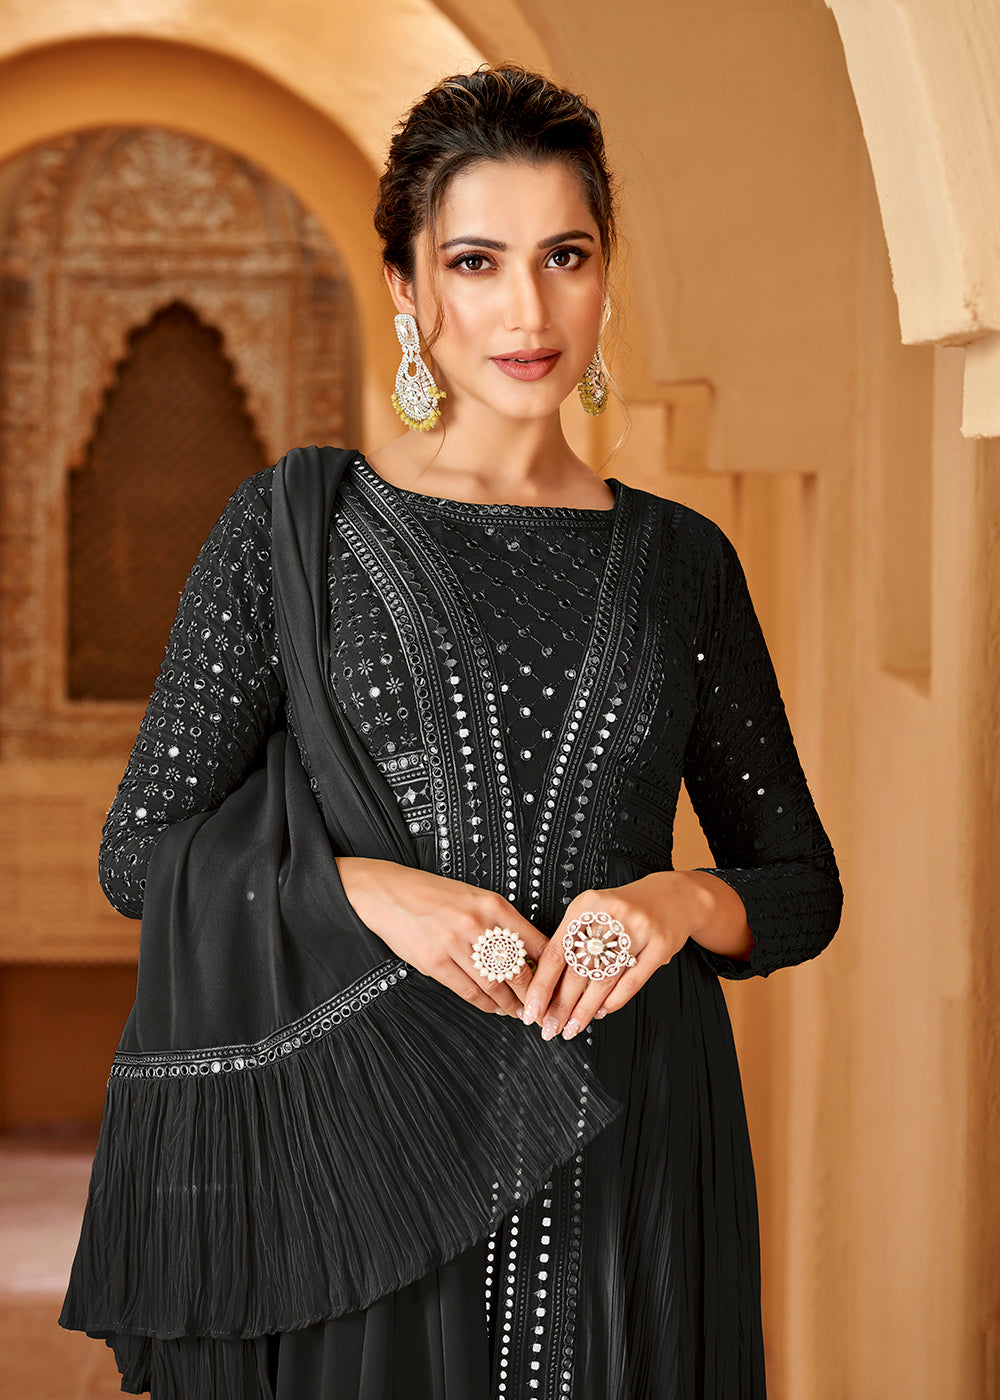 Buy Now Black Crushed Georgette Mirror Lucknowi Work Anarkali Dress Online in USA, UK, Australia, New Zealand, Canada & Worldwide at Empress Clothing. 